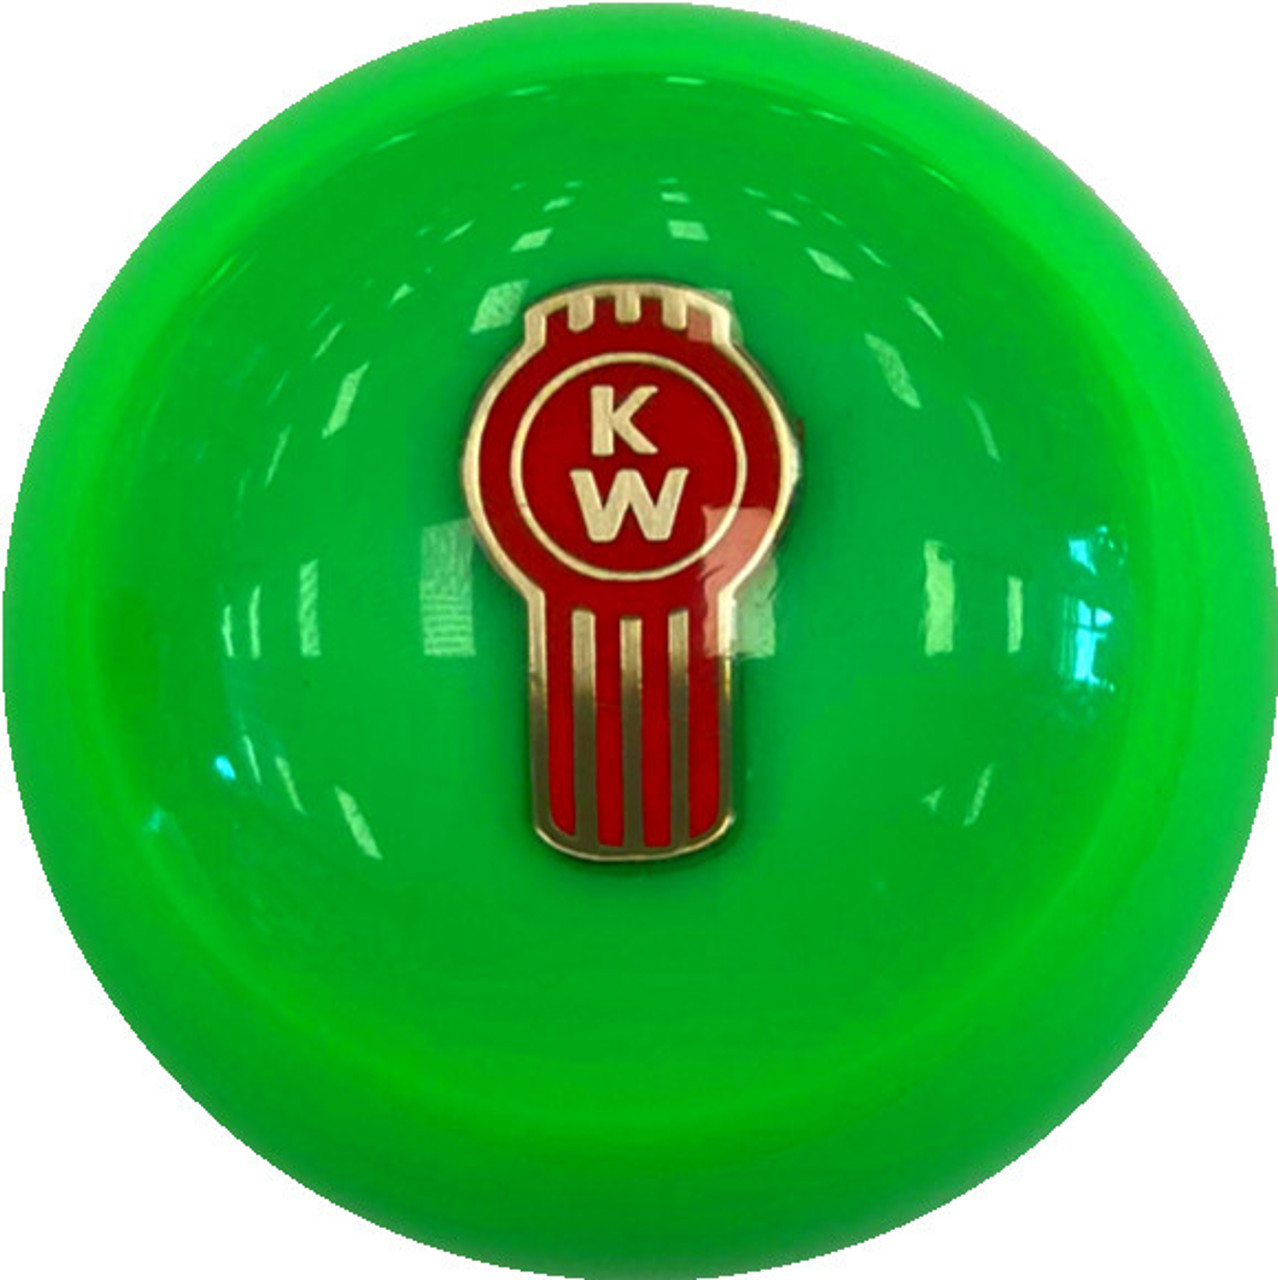 Single Round Brake Knob with Kenworth Logo